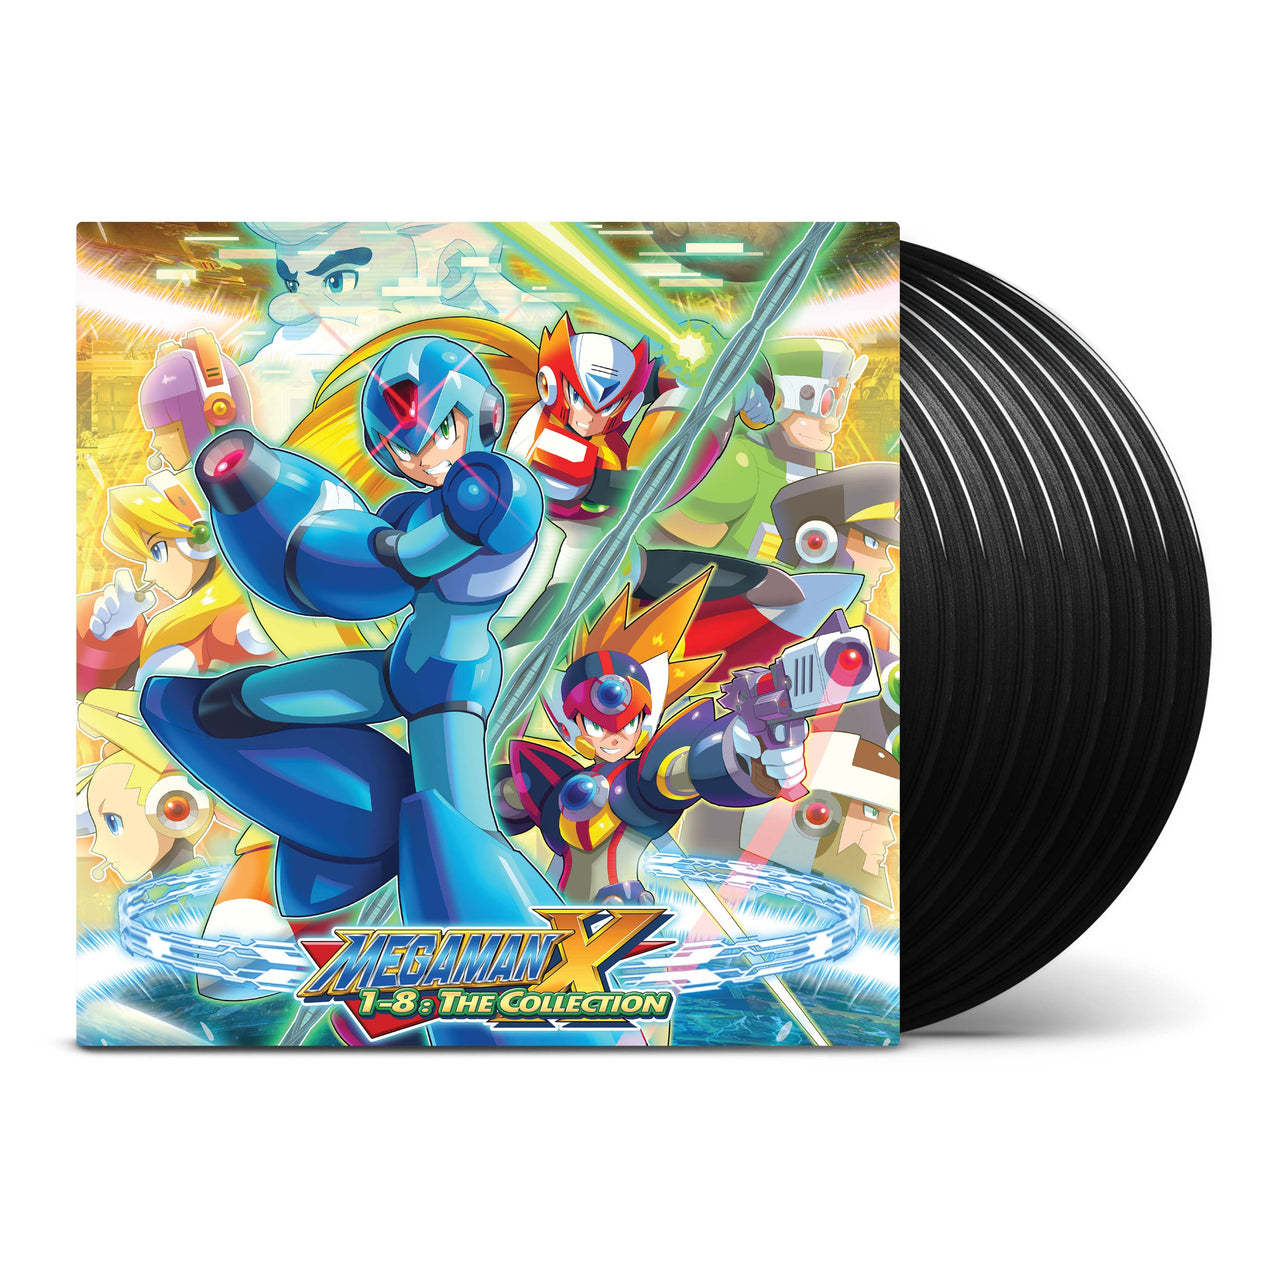 Mega Man X 1-8: The Collection (Deluxe X8LP Boxset)